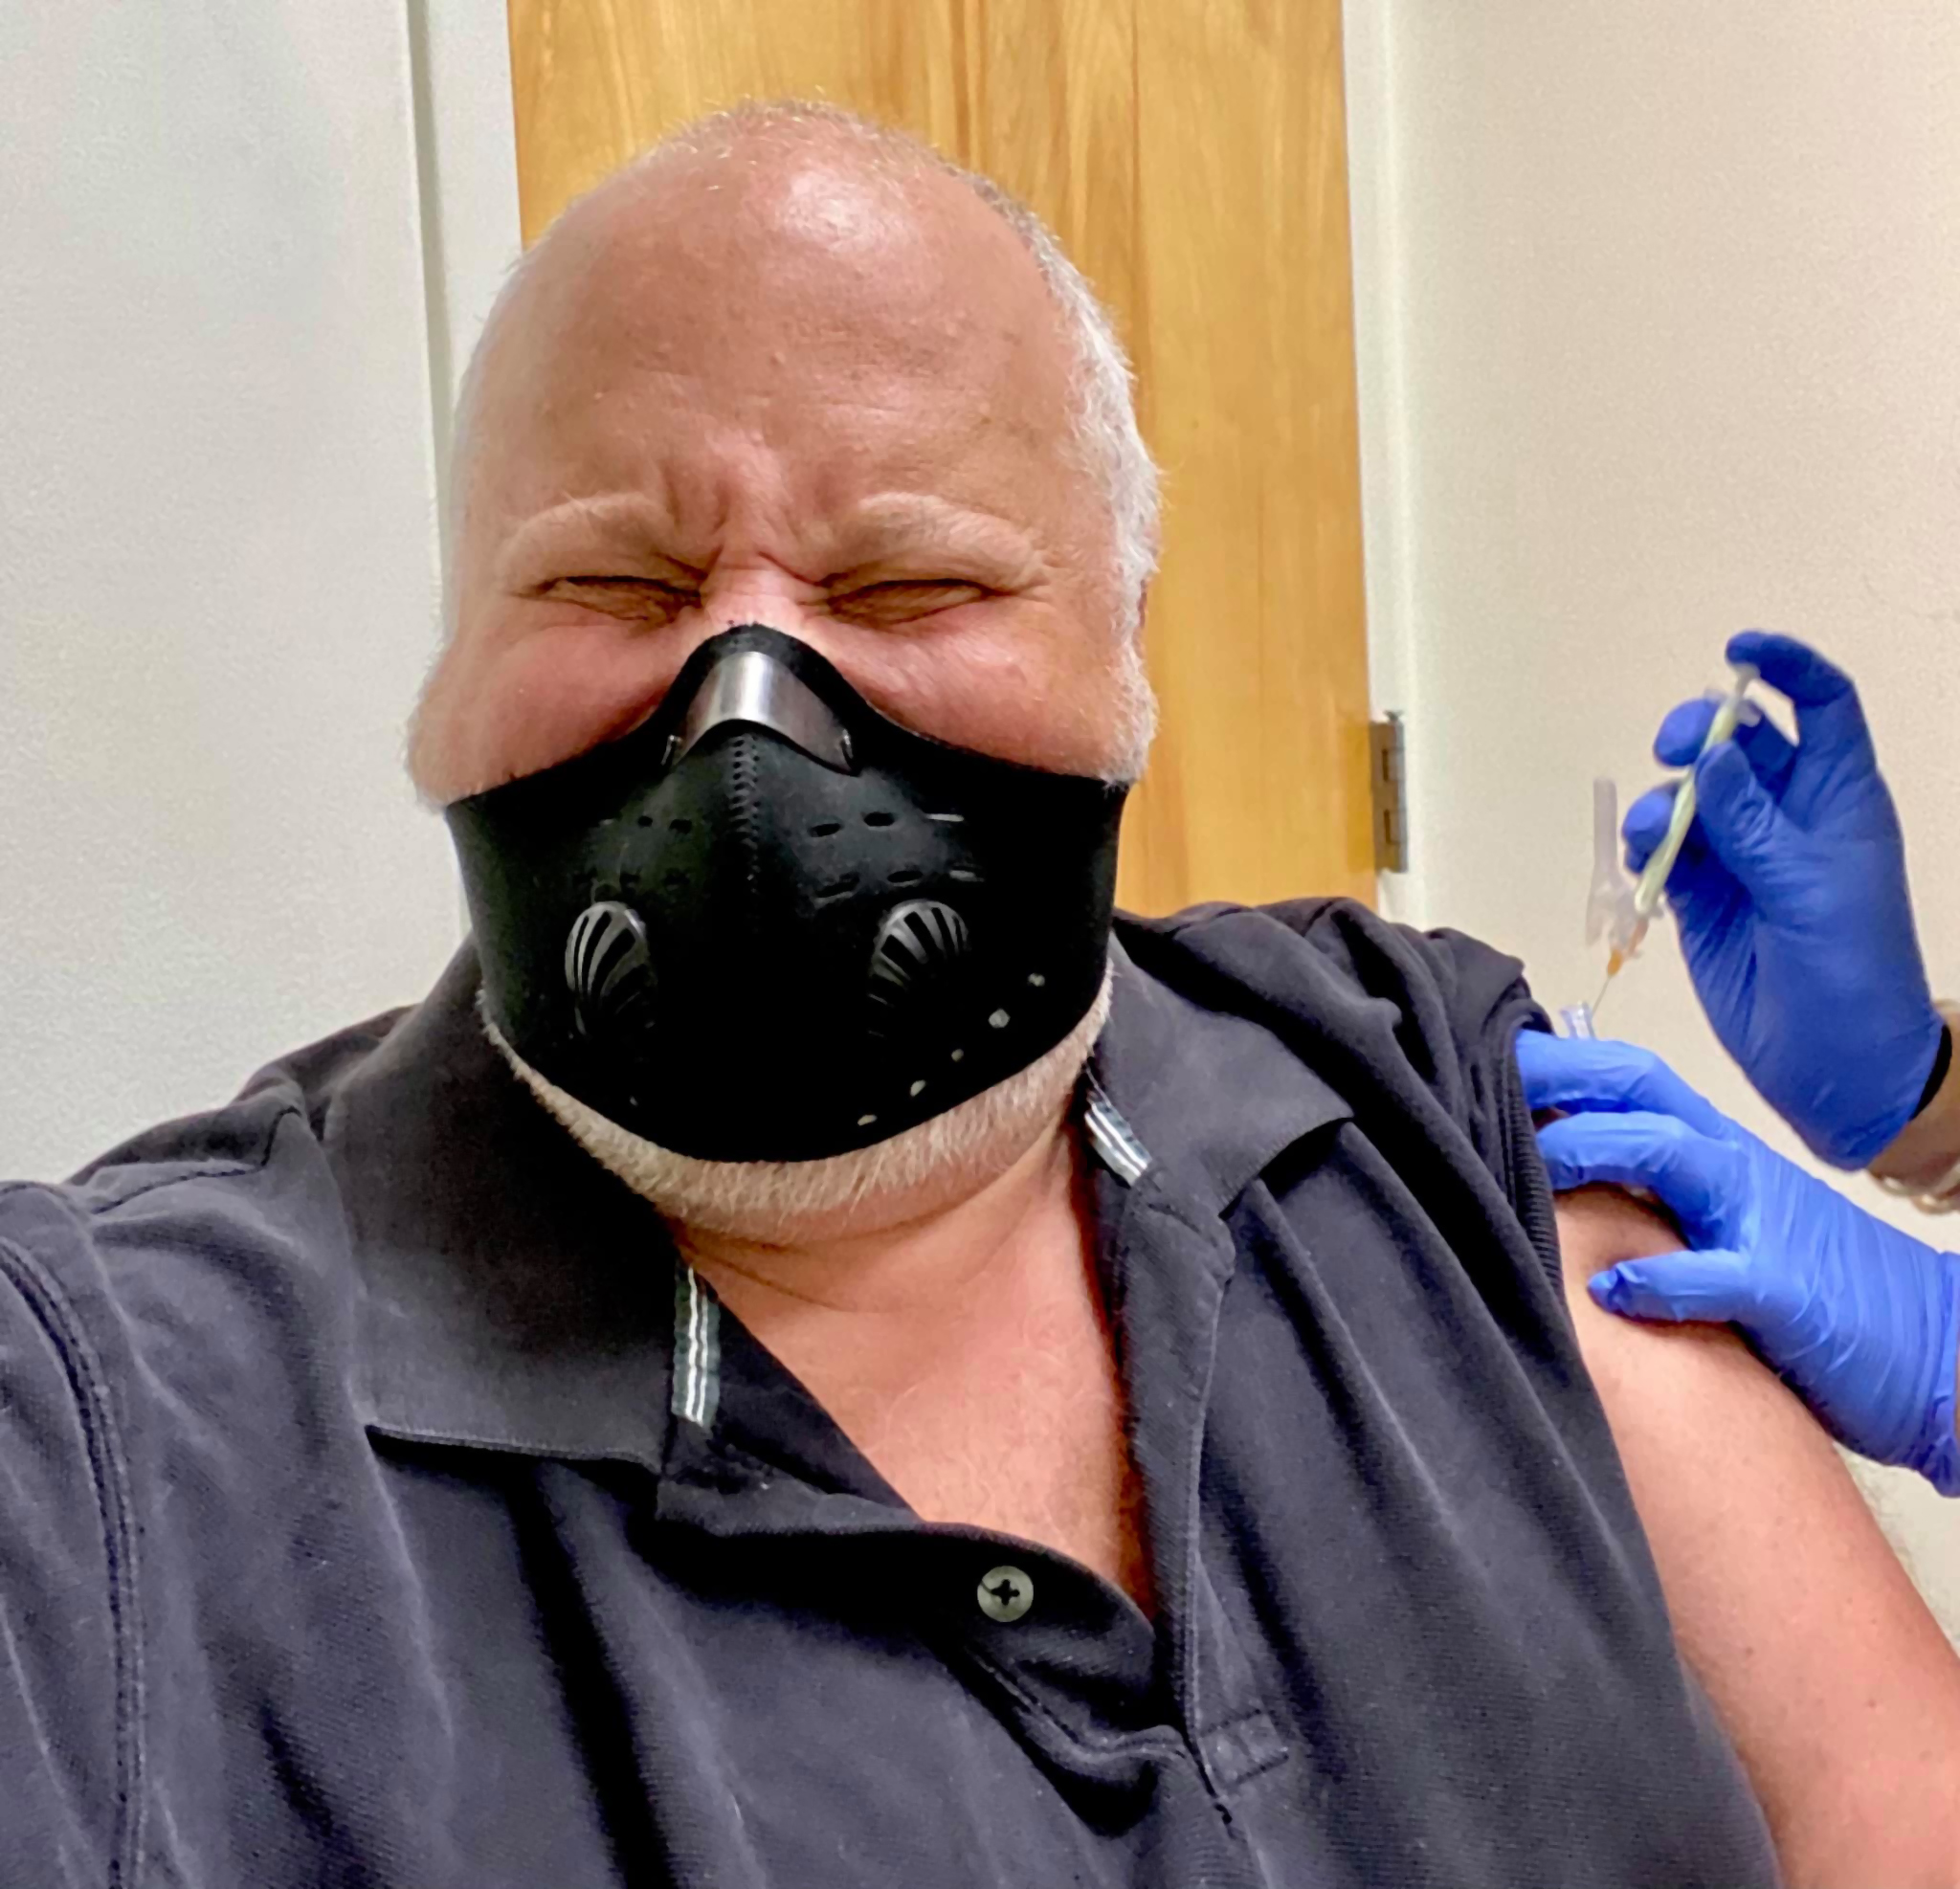 Pfizer vaccine clinical trial participant Jeff receiving shot